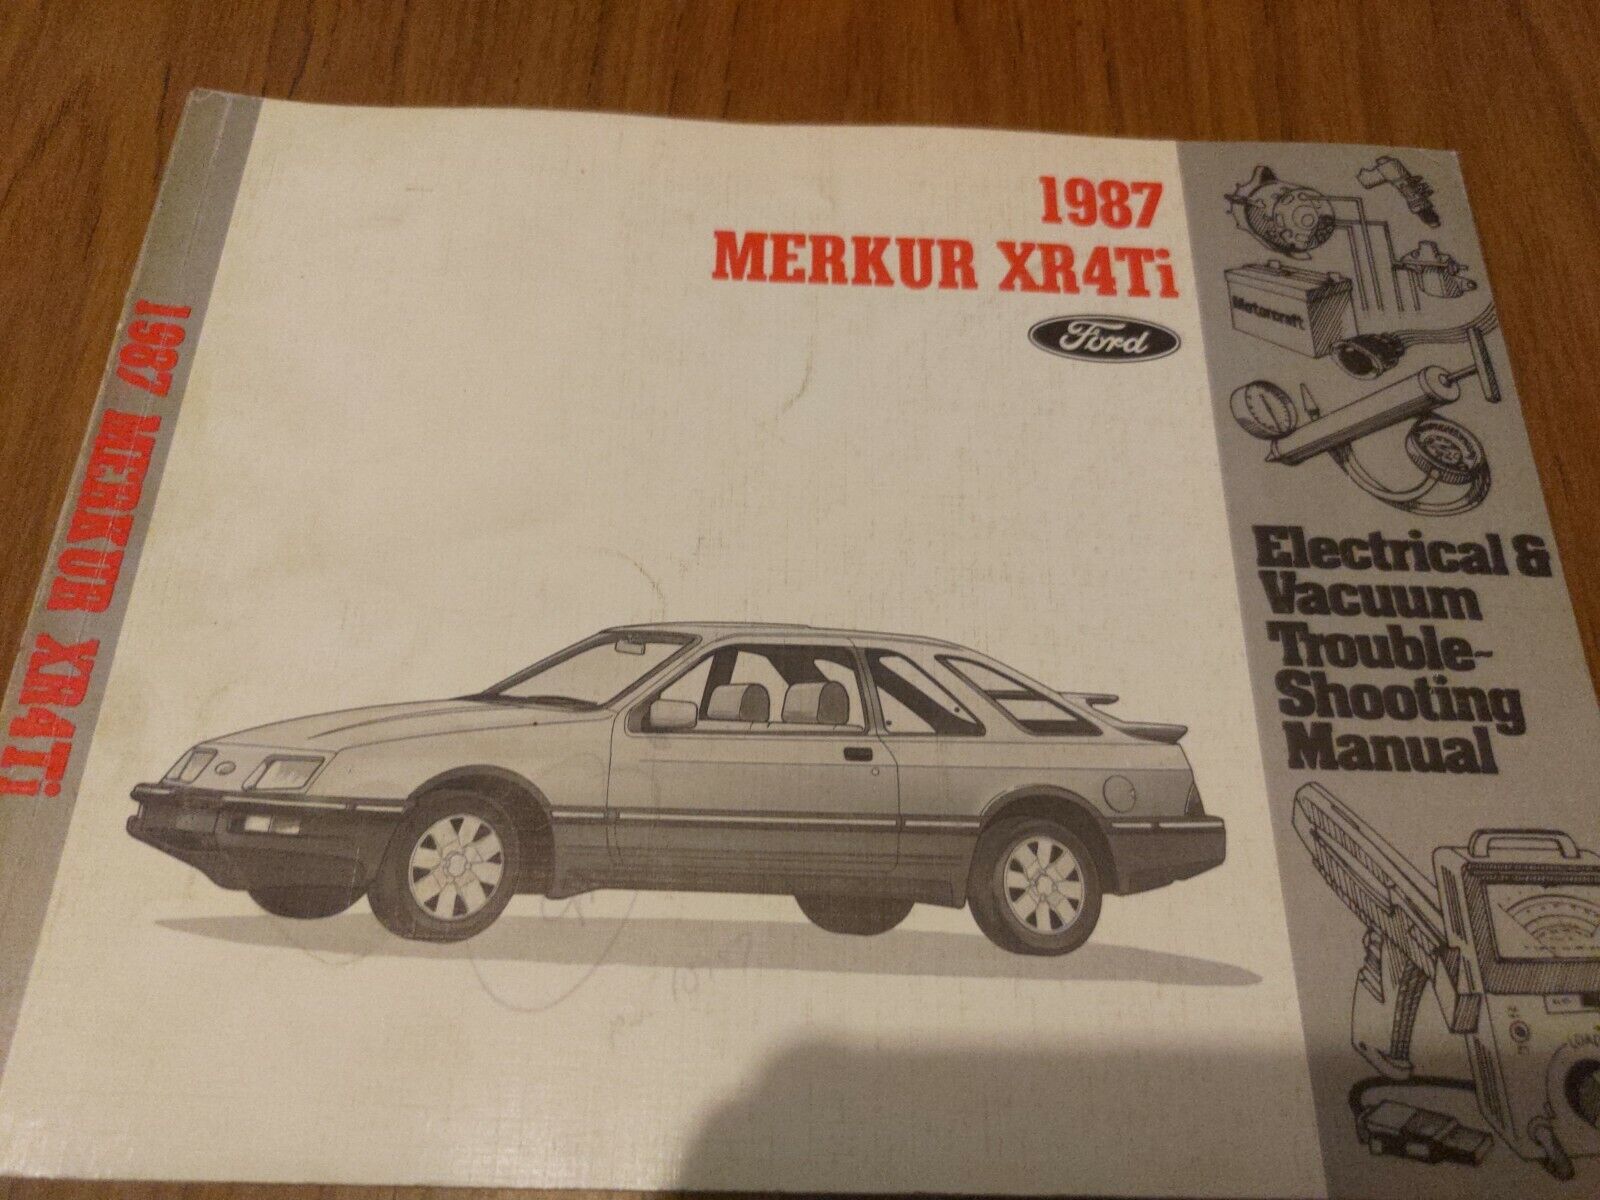 1987 Ford Merkur XR4Ti Electrical Vacuum Troubleshooting Manual